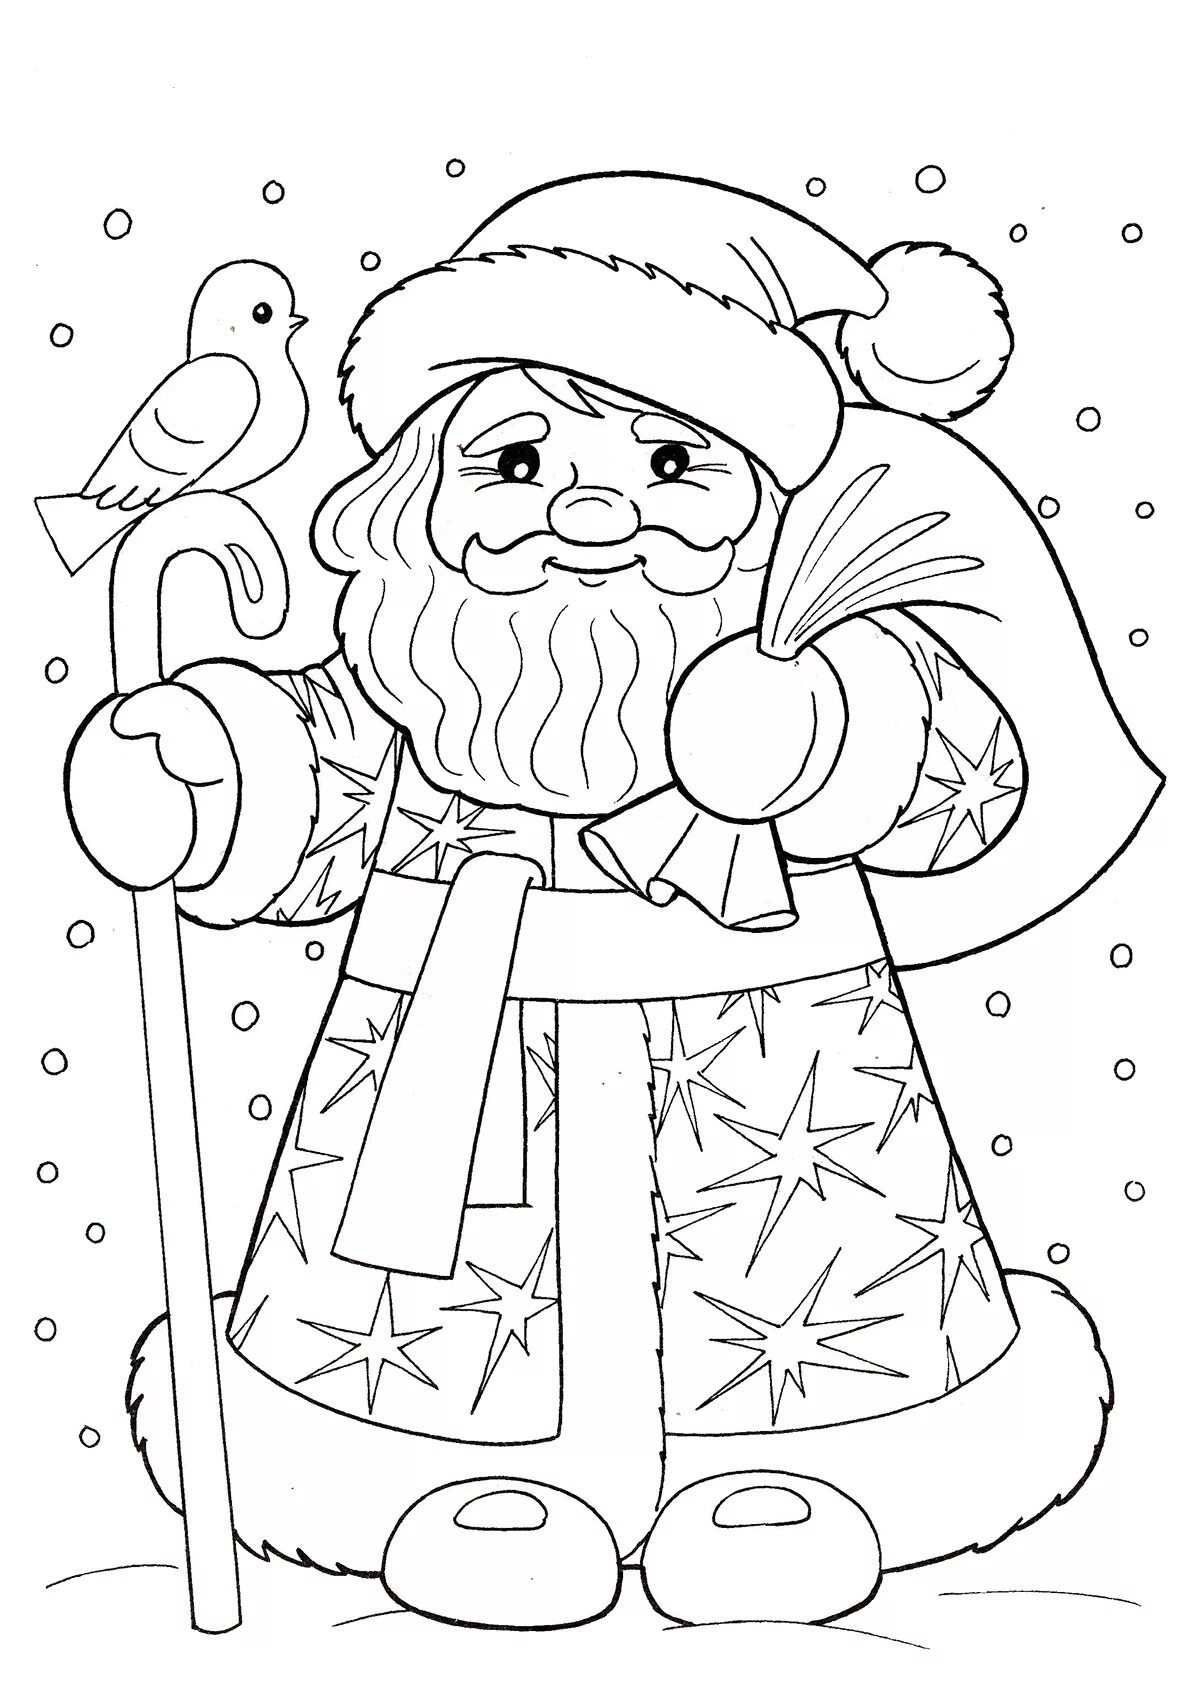 Coloring page gorgeous santa claus